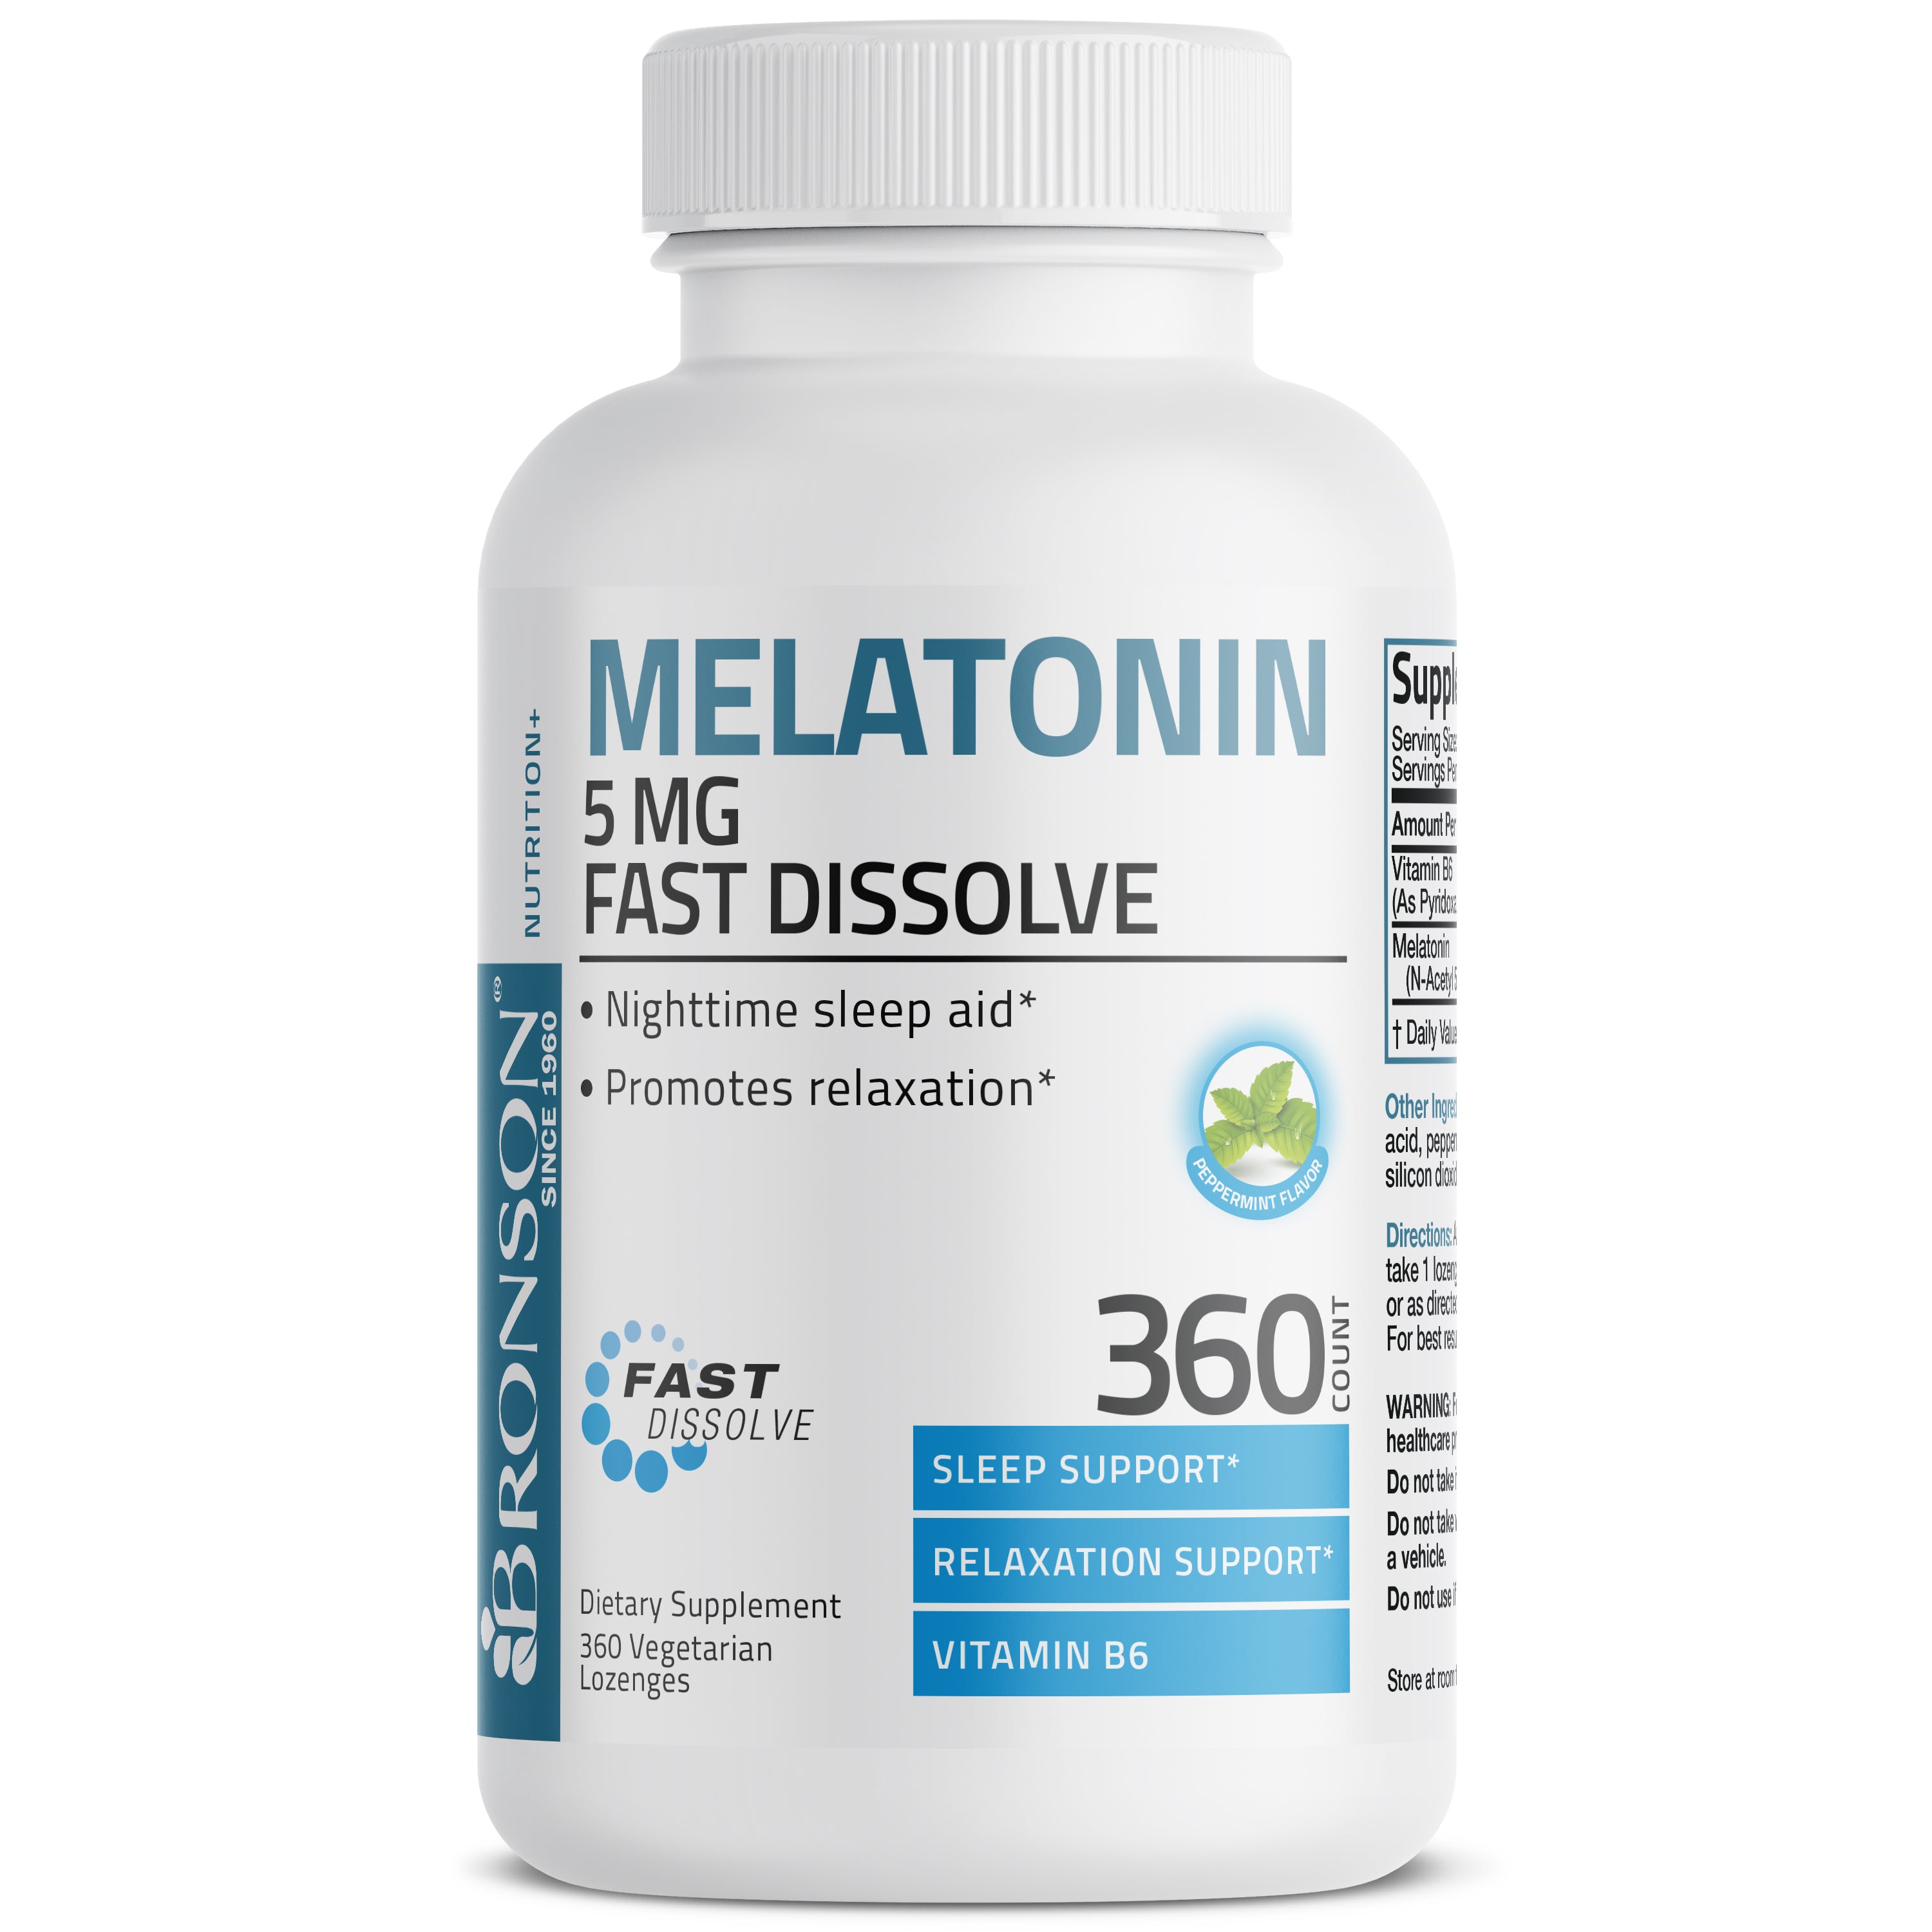 Melatonin Fast Dissolve - 5 mg - 360 Vegetarian Lozenges view 4 of 6